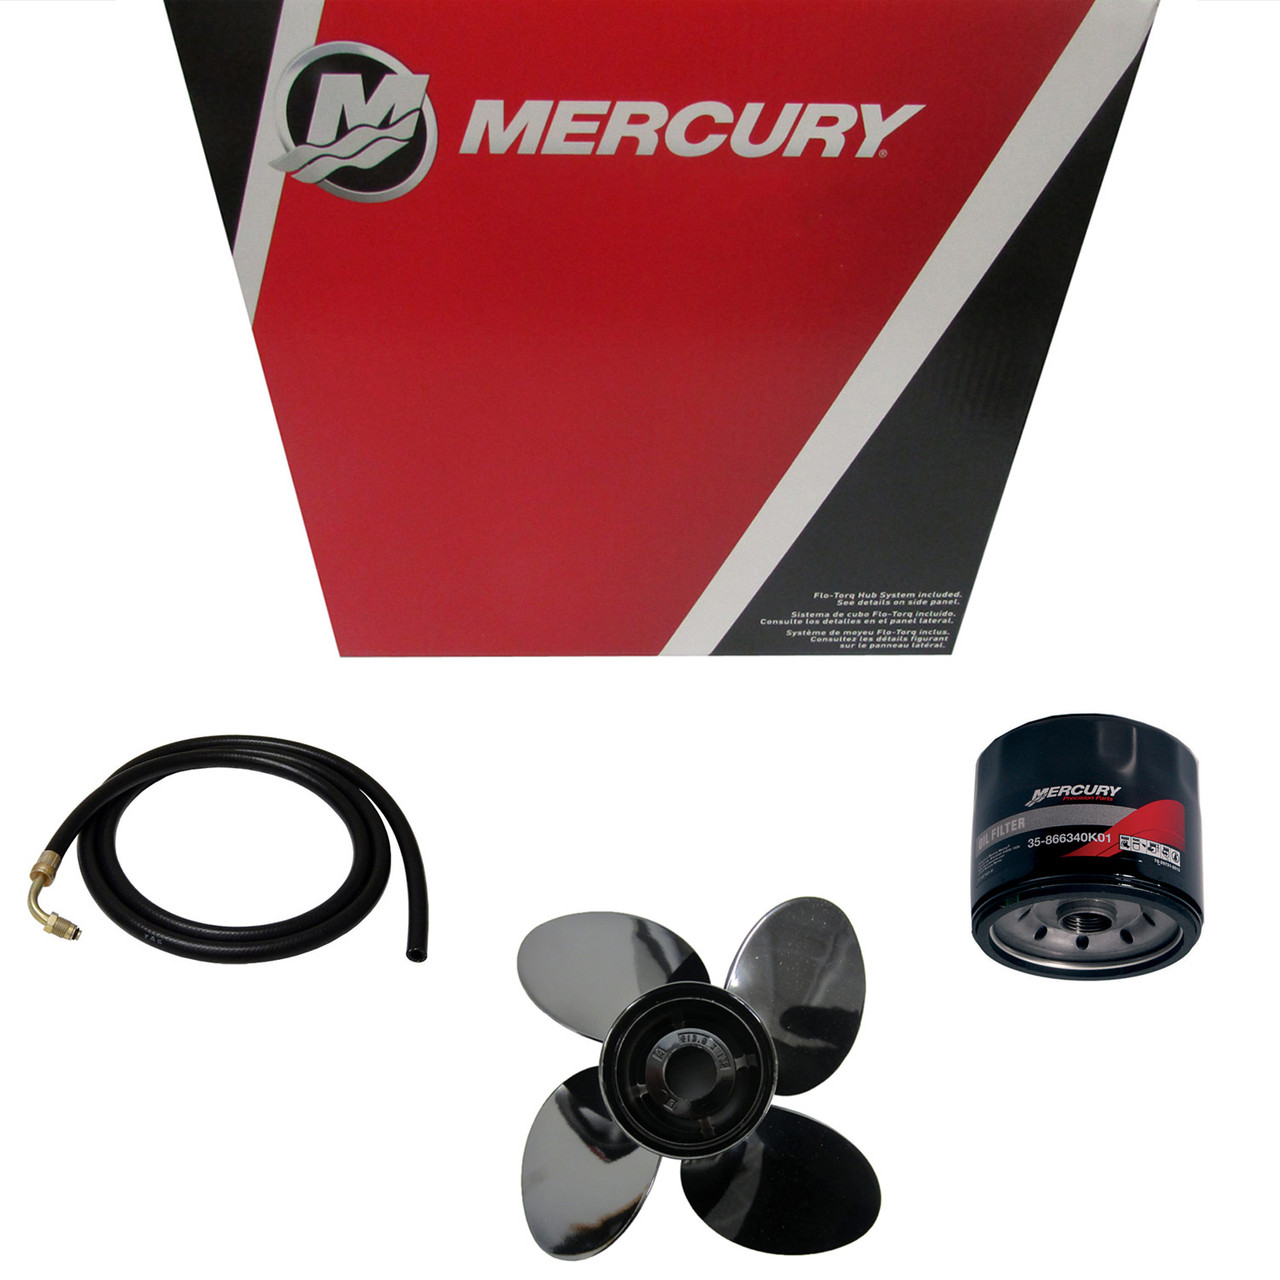 Mercury Marine/Mercruiser  New OEM IGNITION COIL 339-859738T1